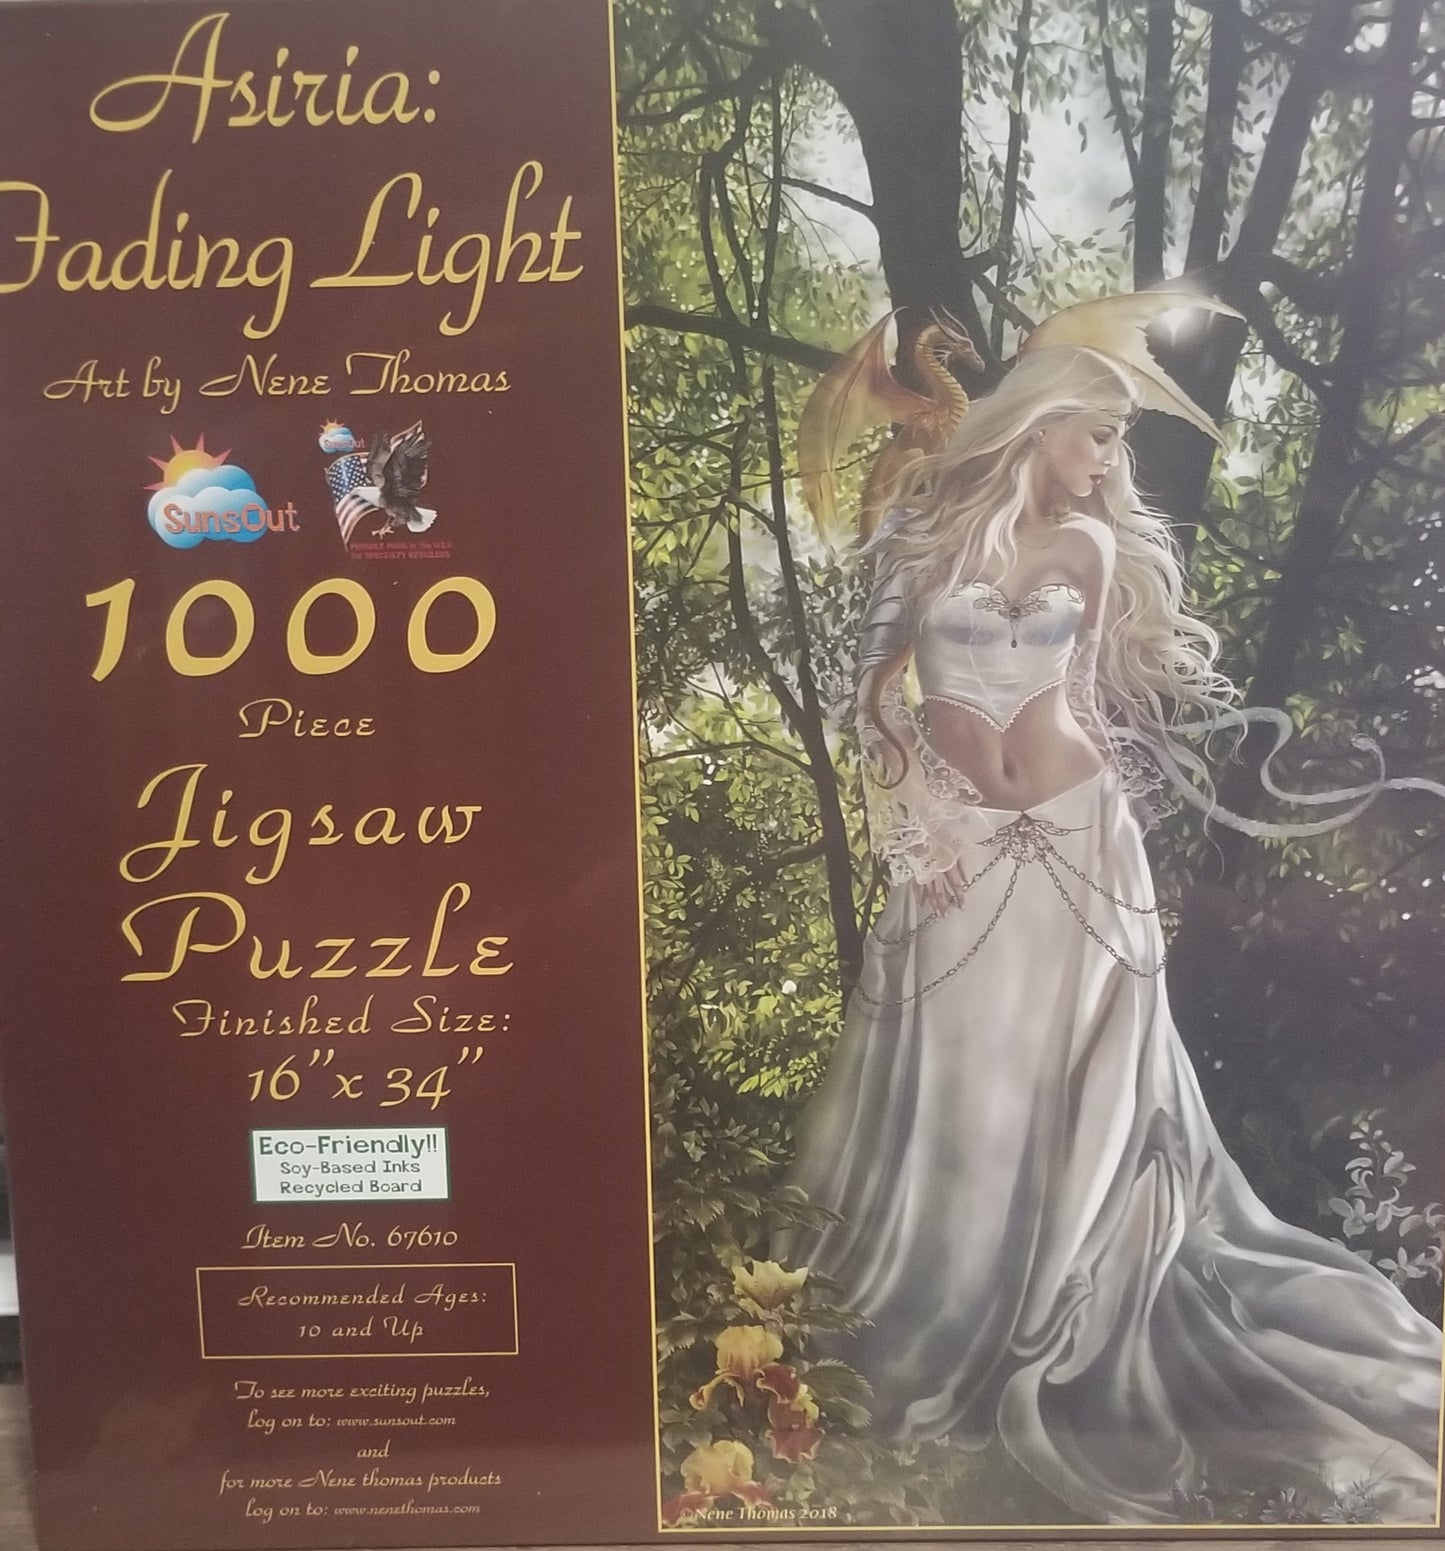 Asiria: Fading Light by Nene Thomas, 1000 Piece Puzzle